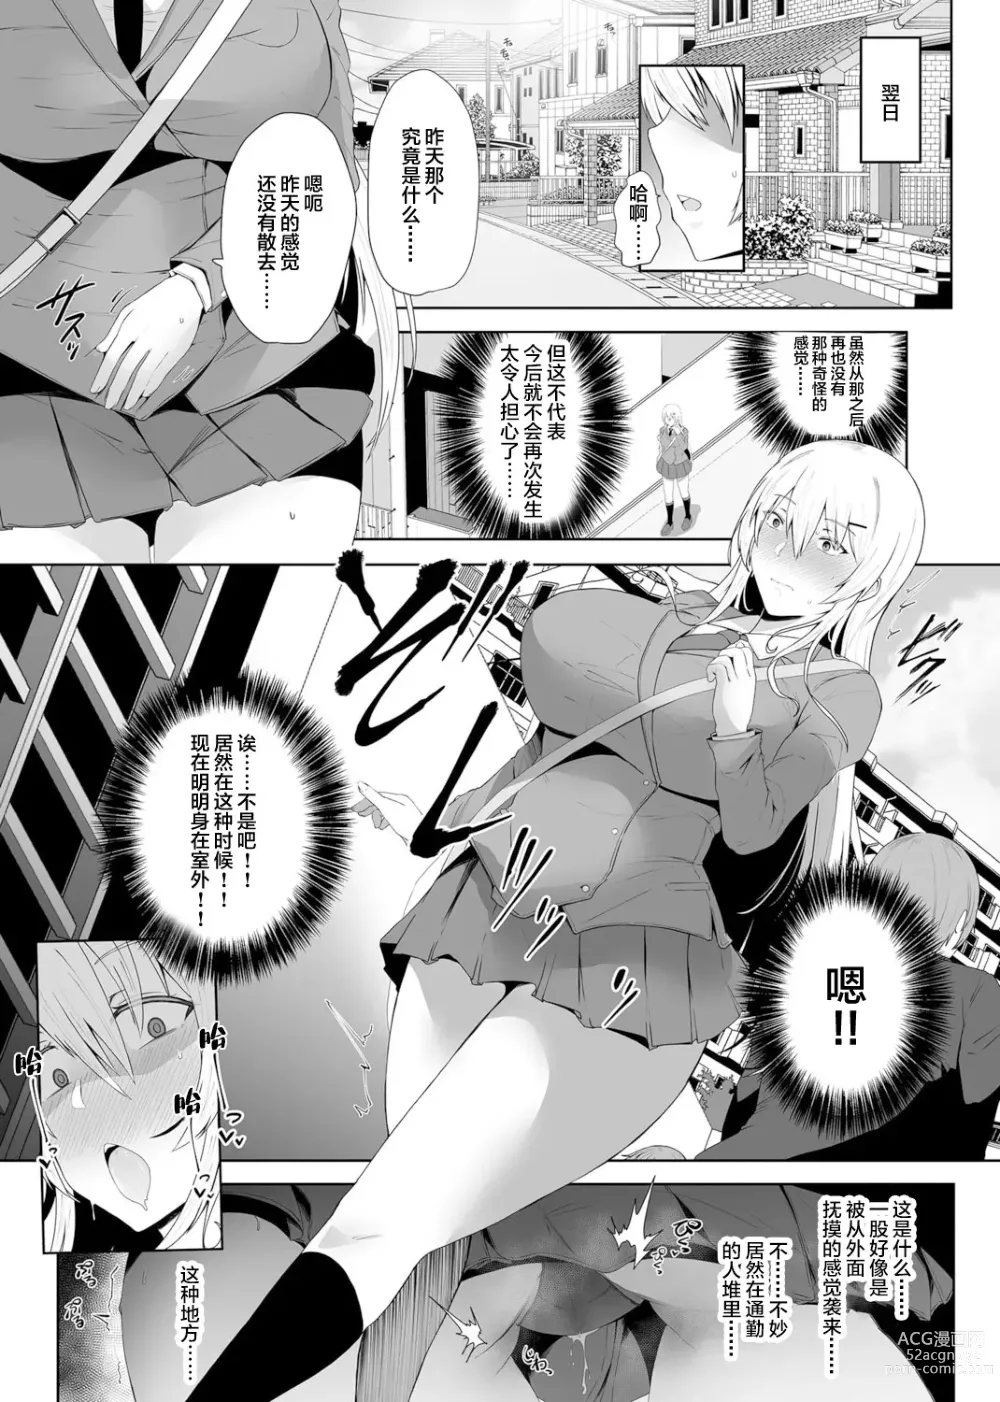 Page 10 of manga Revenge Enkaku Onaho